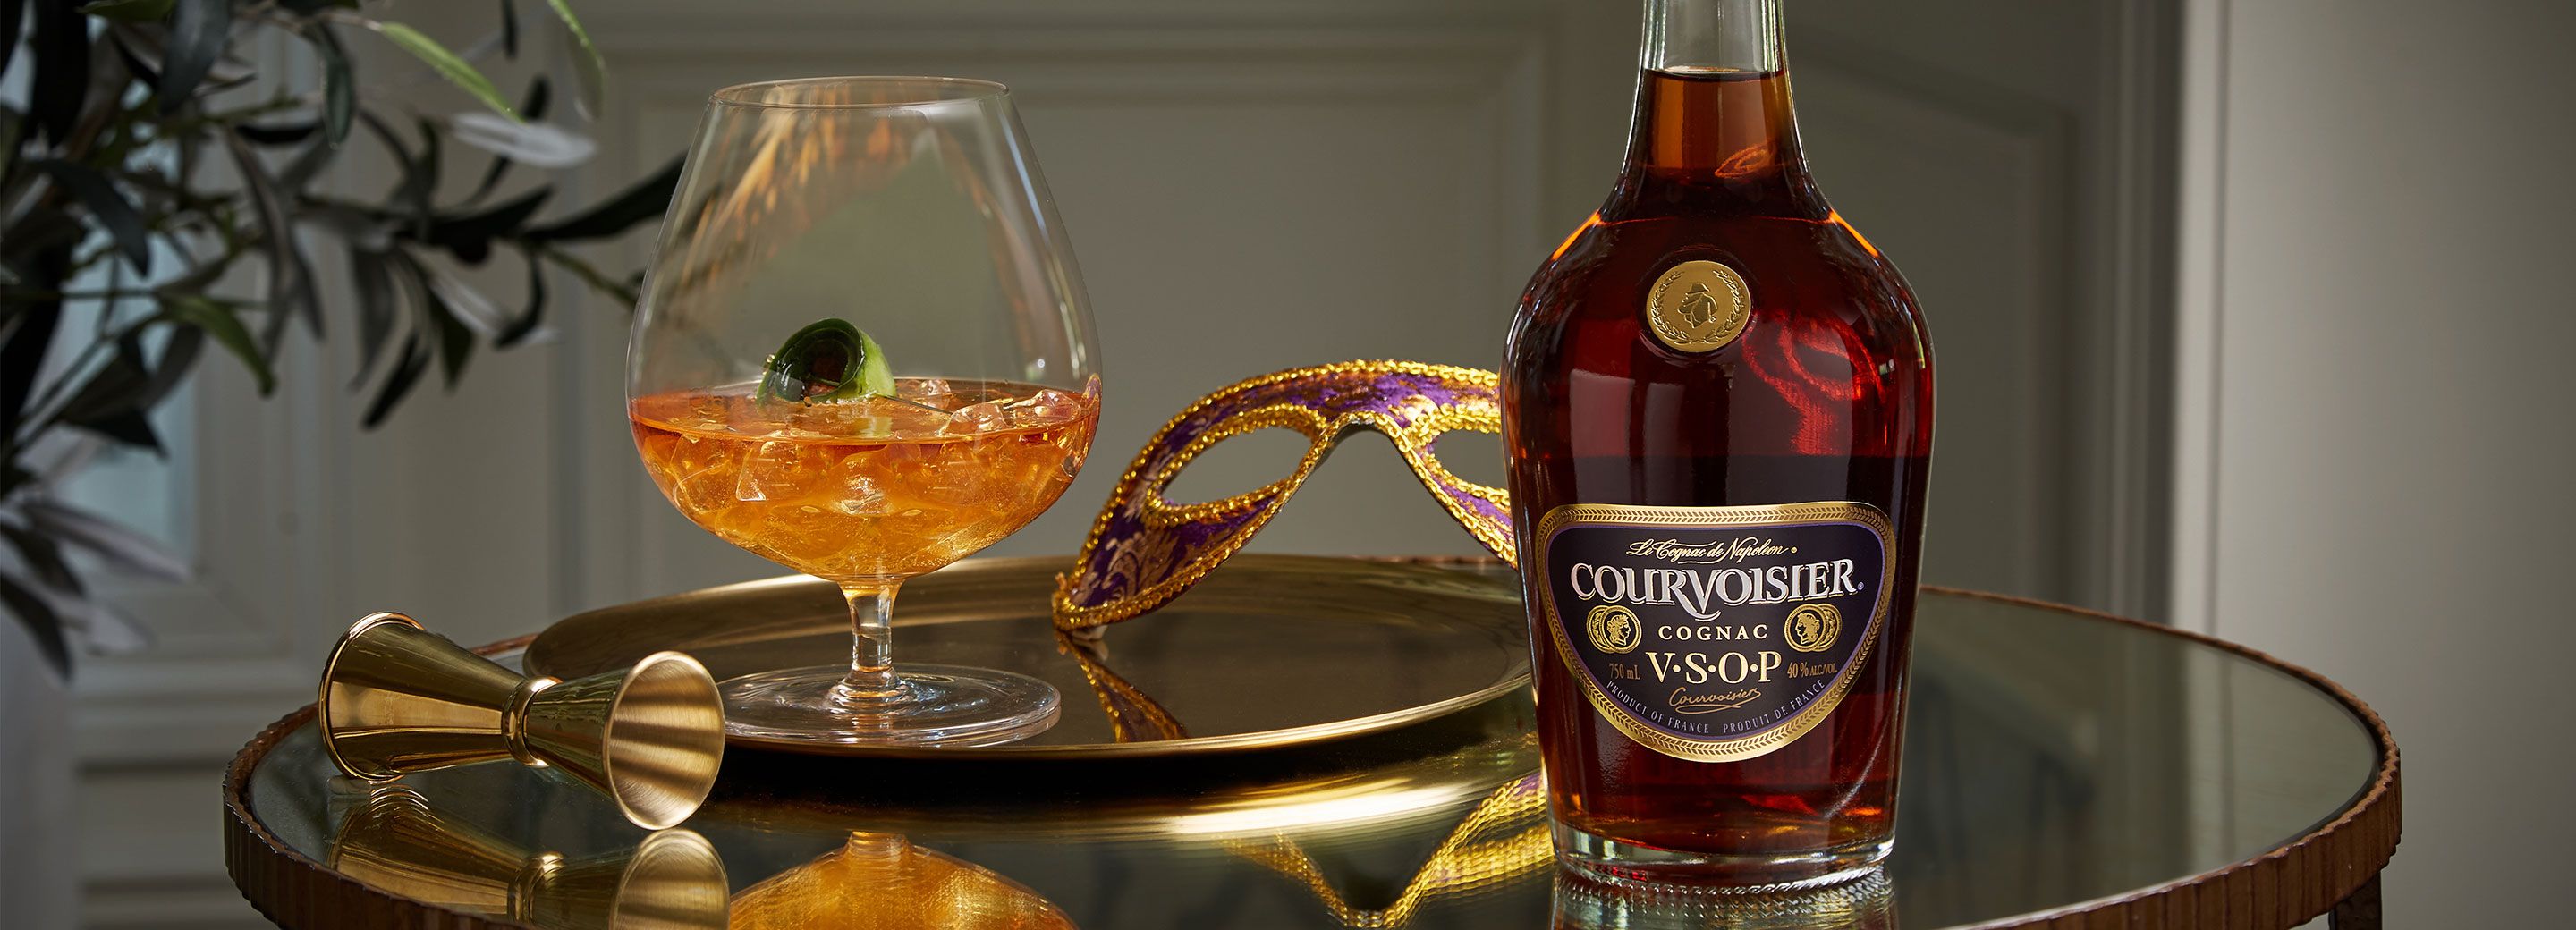 Courvoisier Cognac Summit